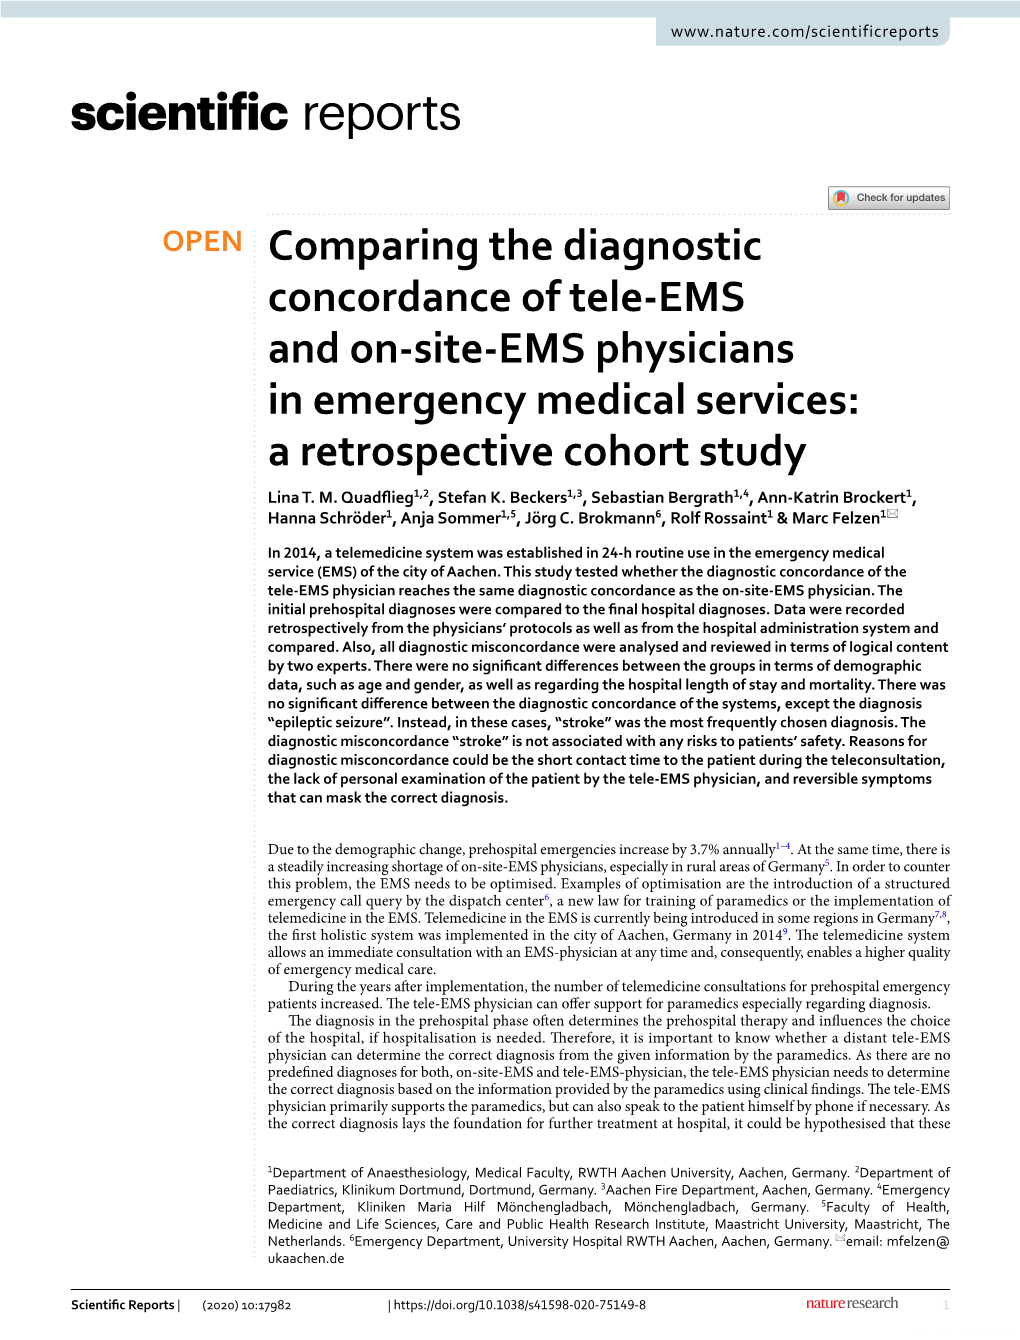 Comparing the Diagnostic Concordance of Tele-EMS